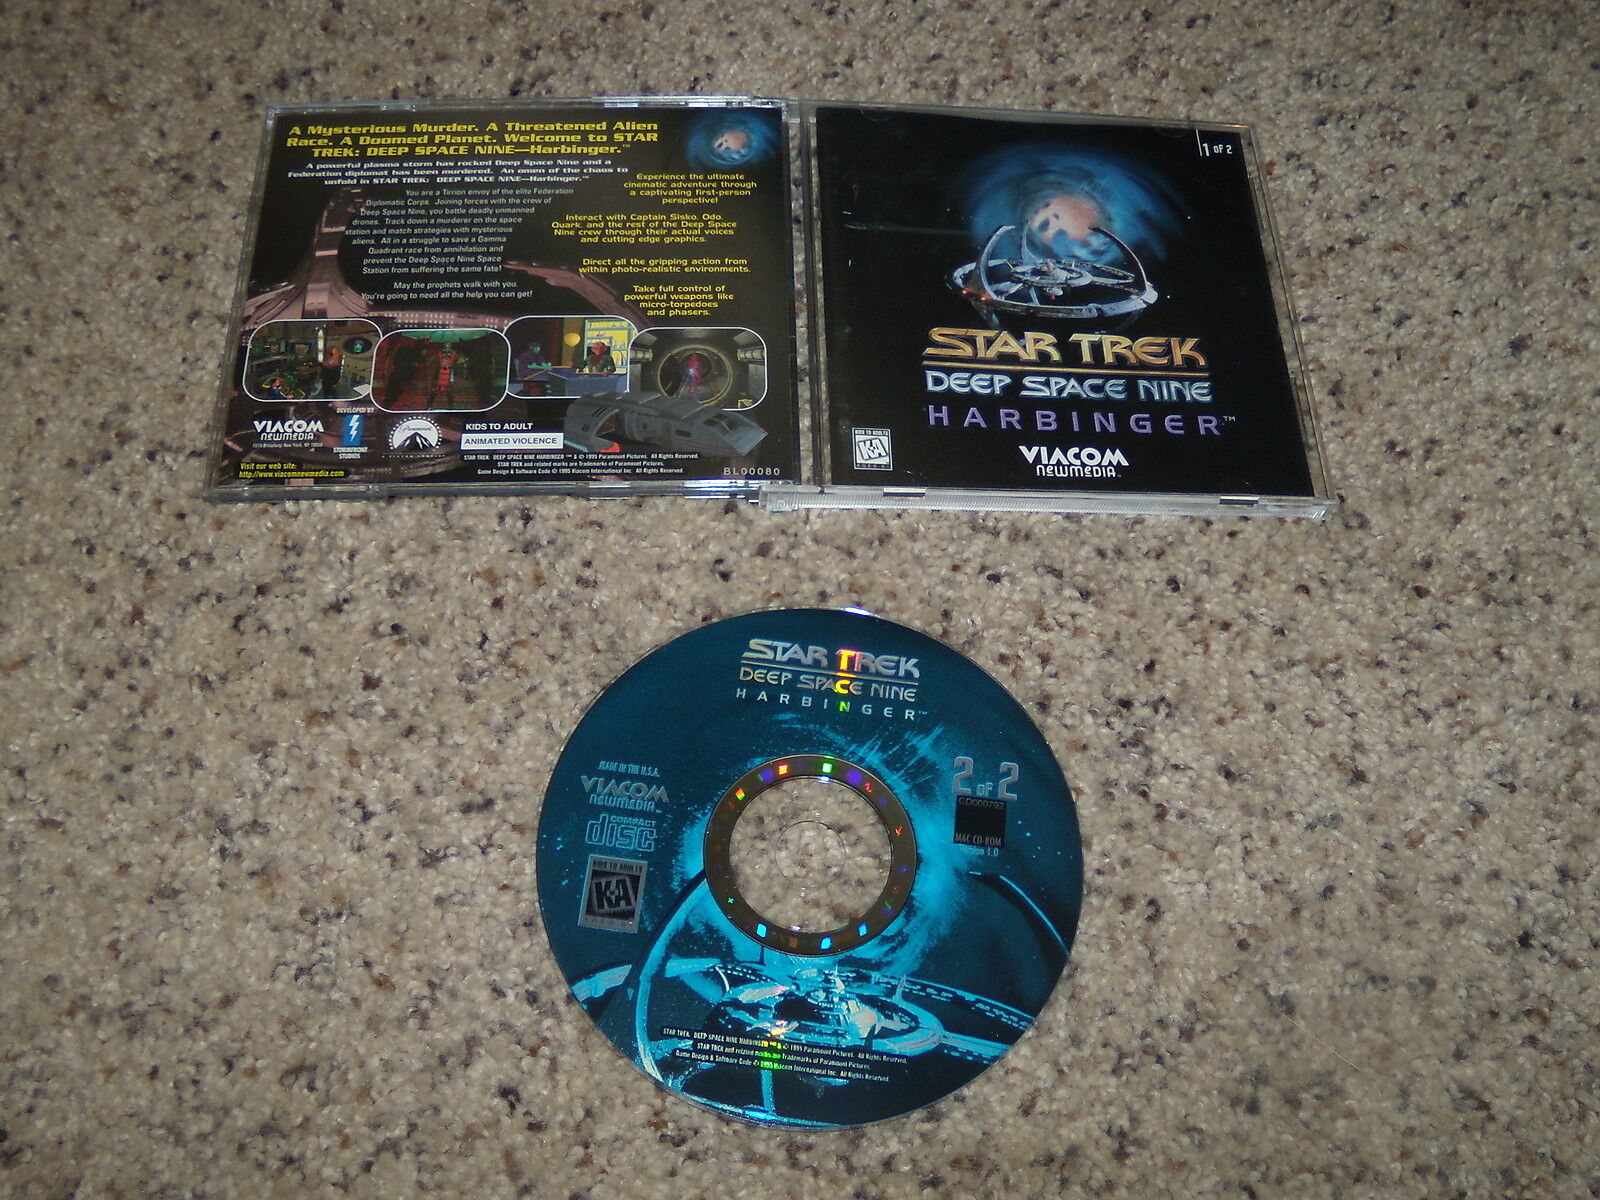 Star Trek Deep Space Nine Haringer (Macintosh Replacement disk) Disk 2 only